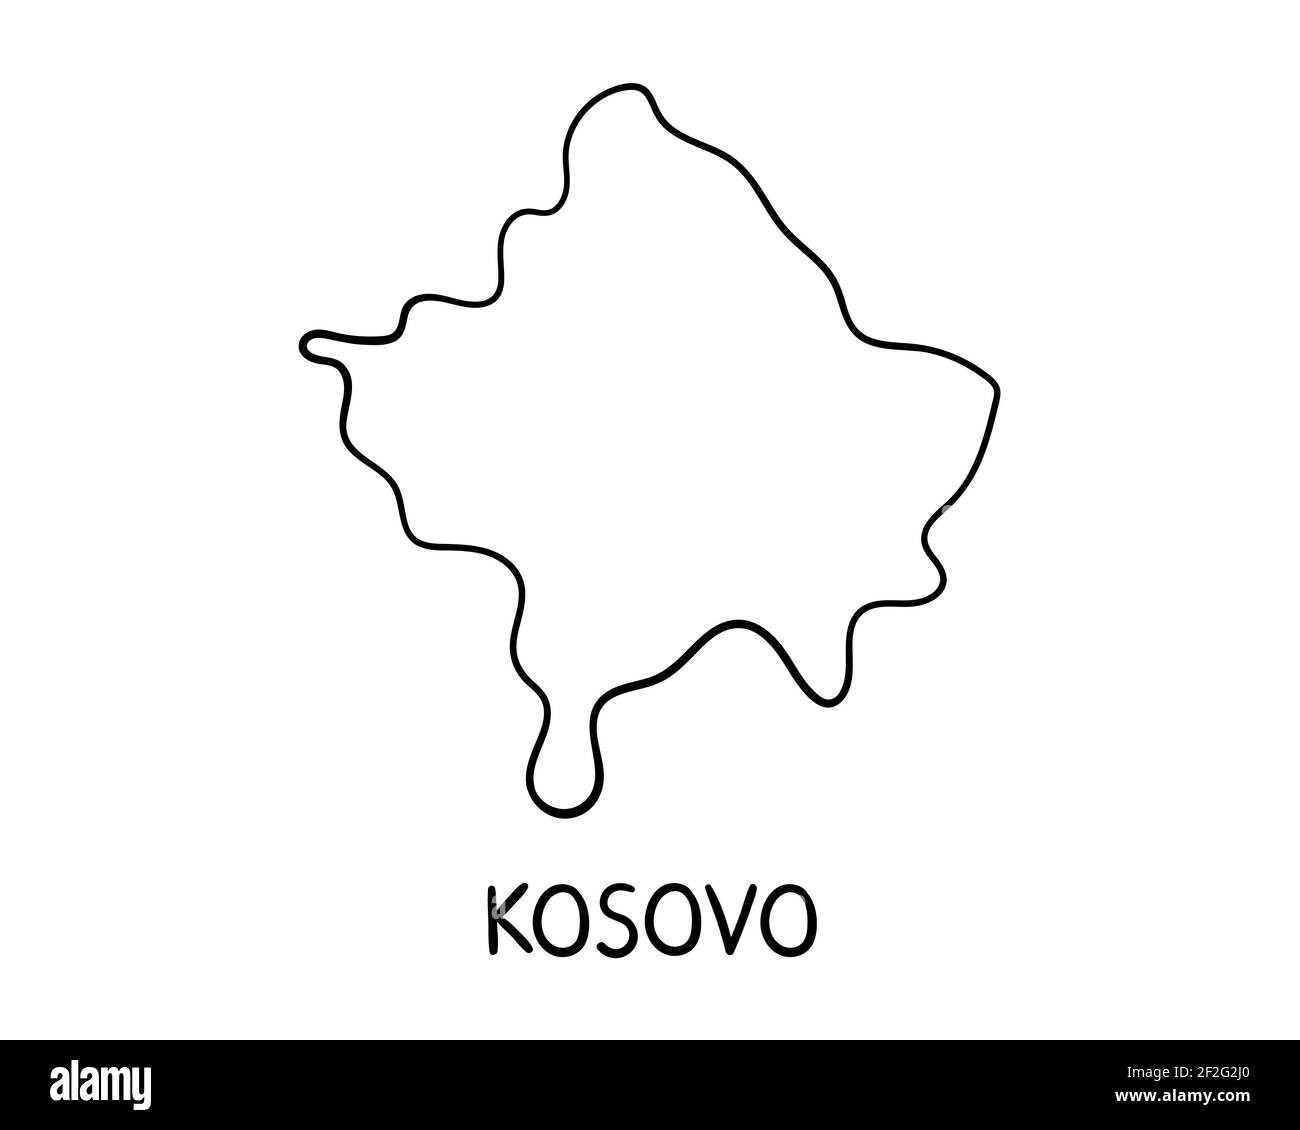 Kosovo Map - Hand Drawn Illustration Stock Photo